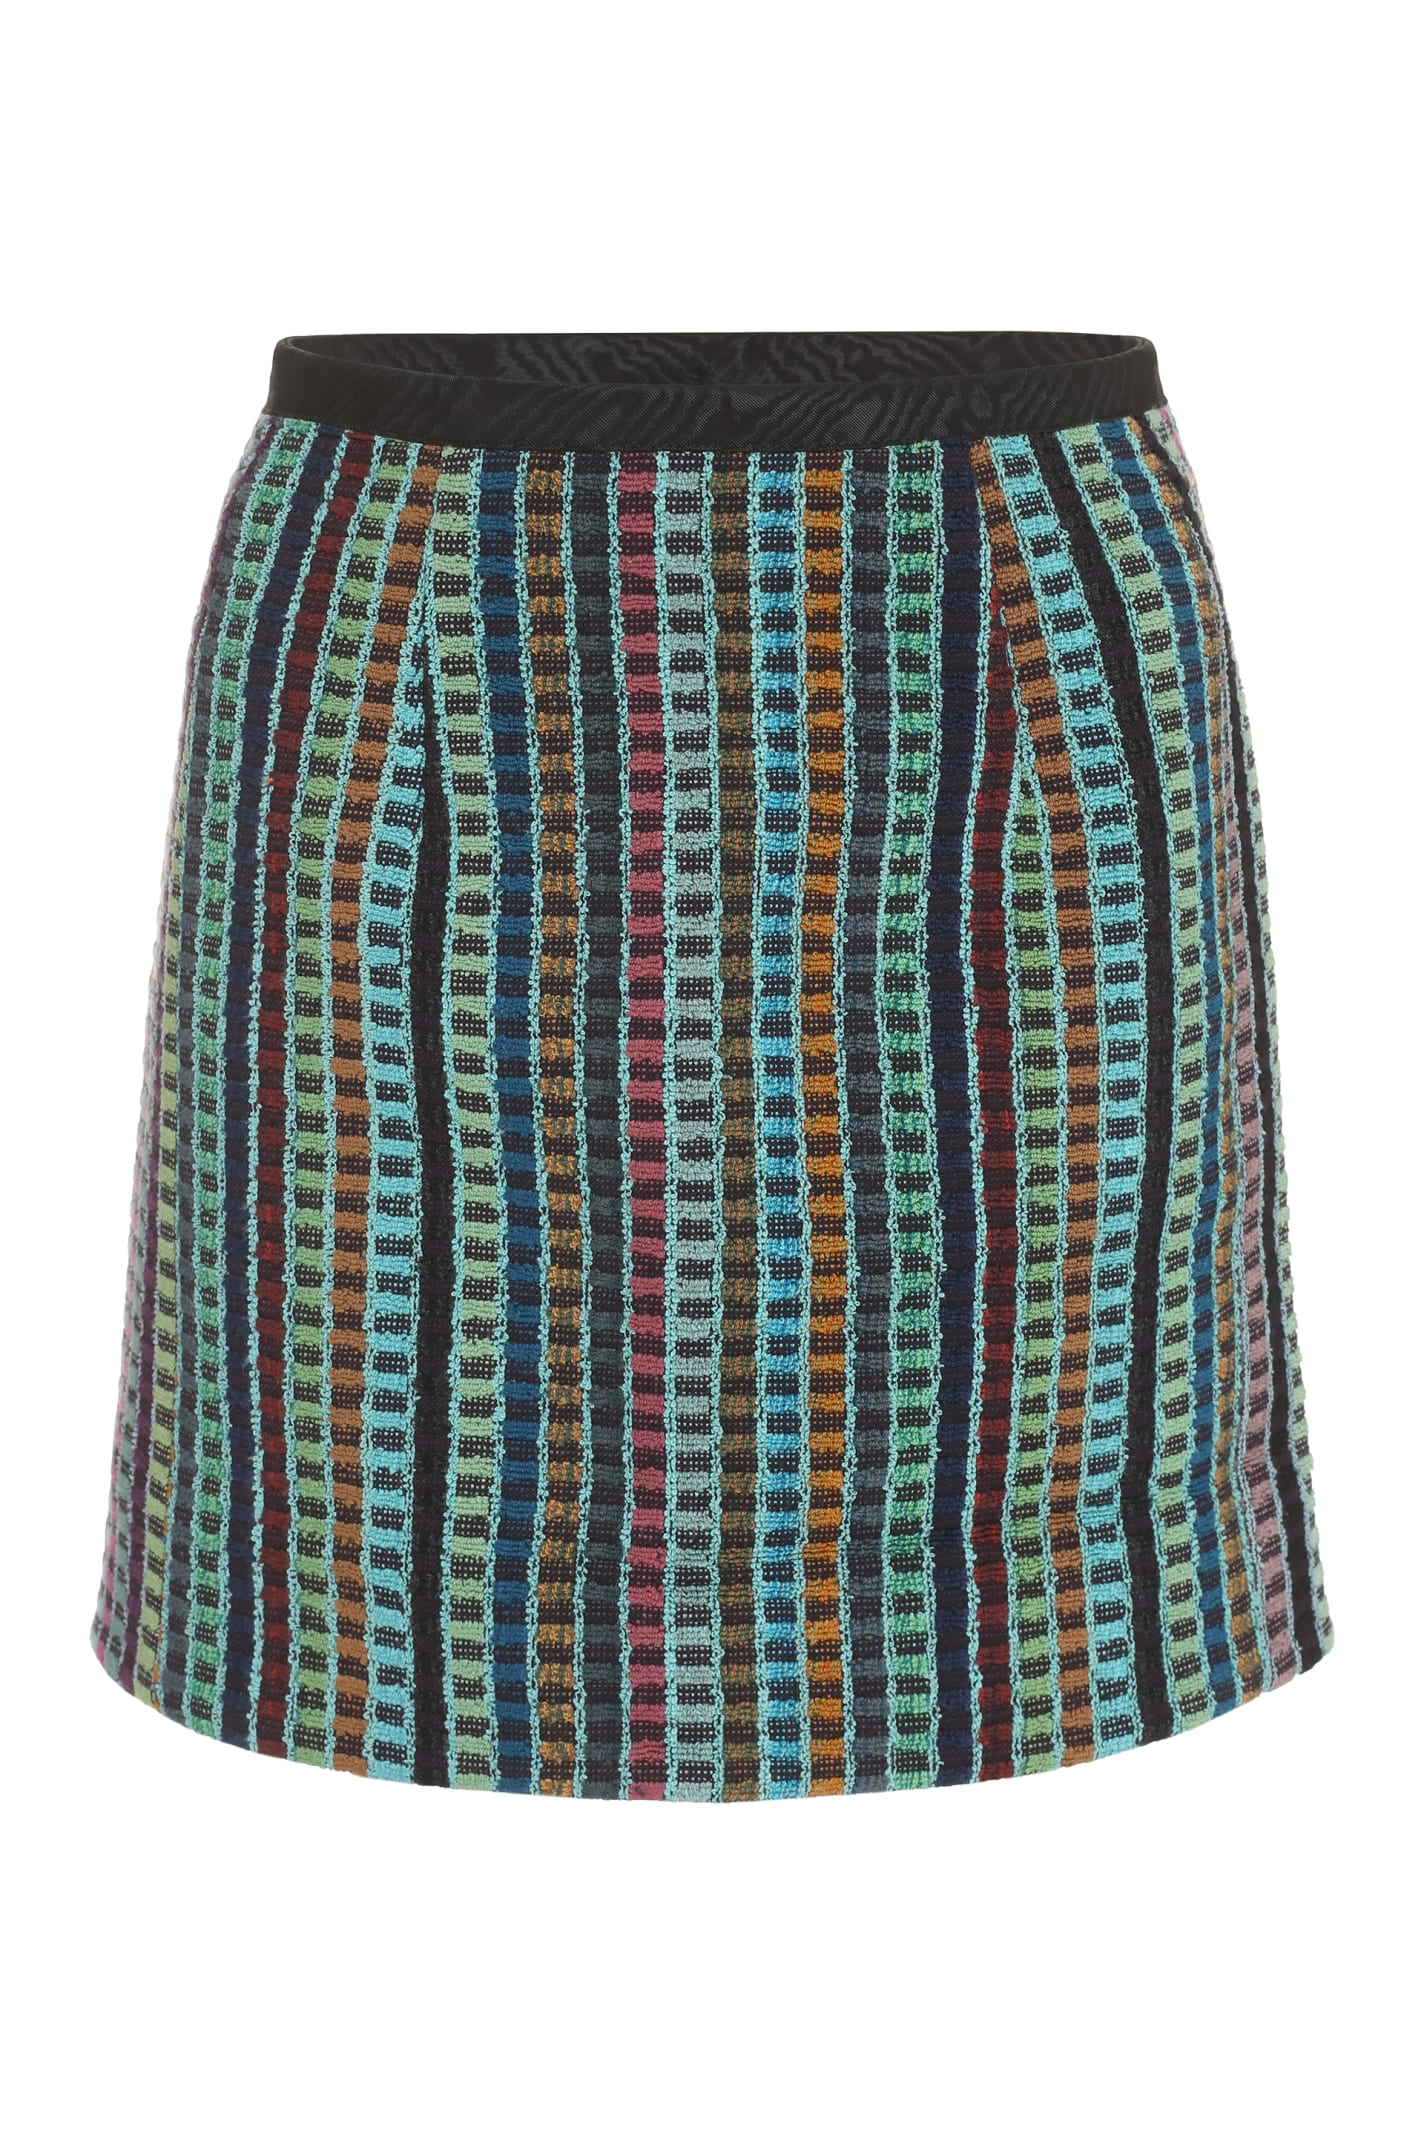 Marine Serre Multicolor Jacquard Mini Skirt